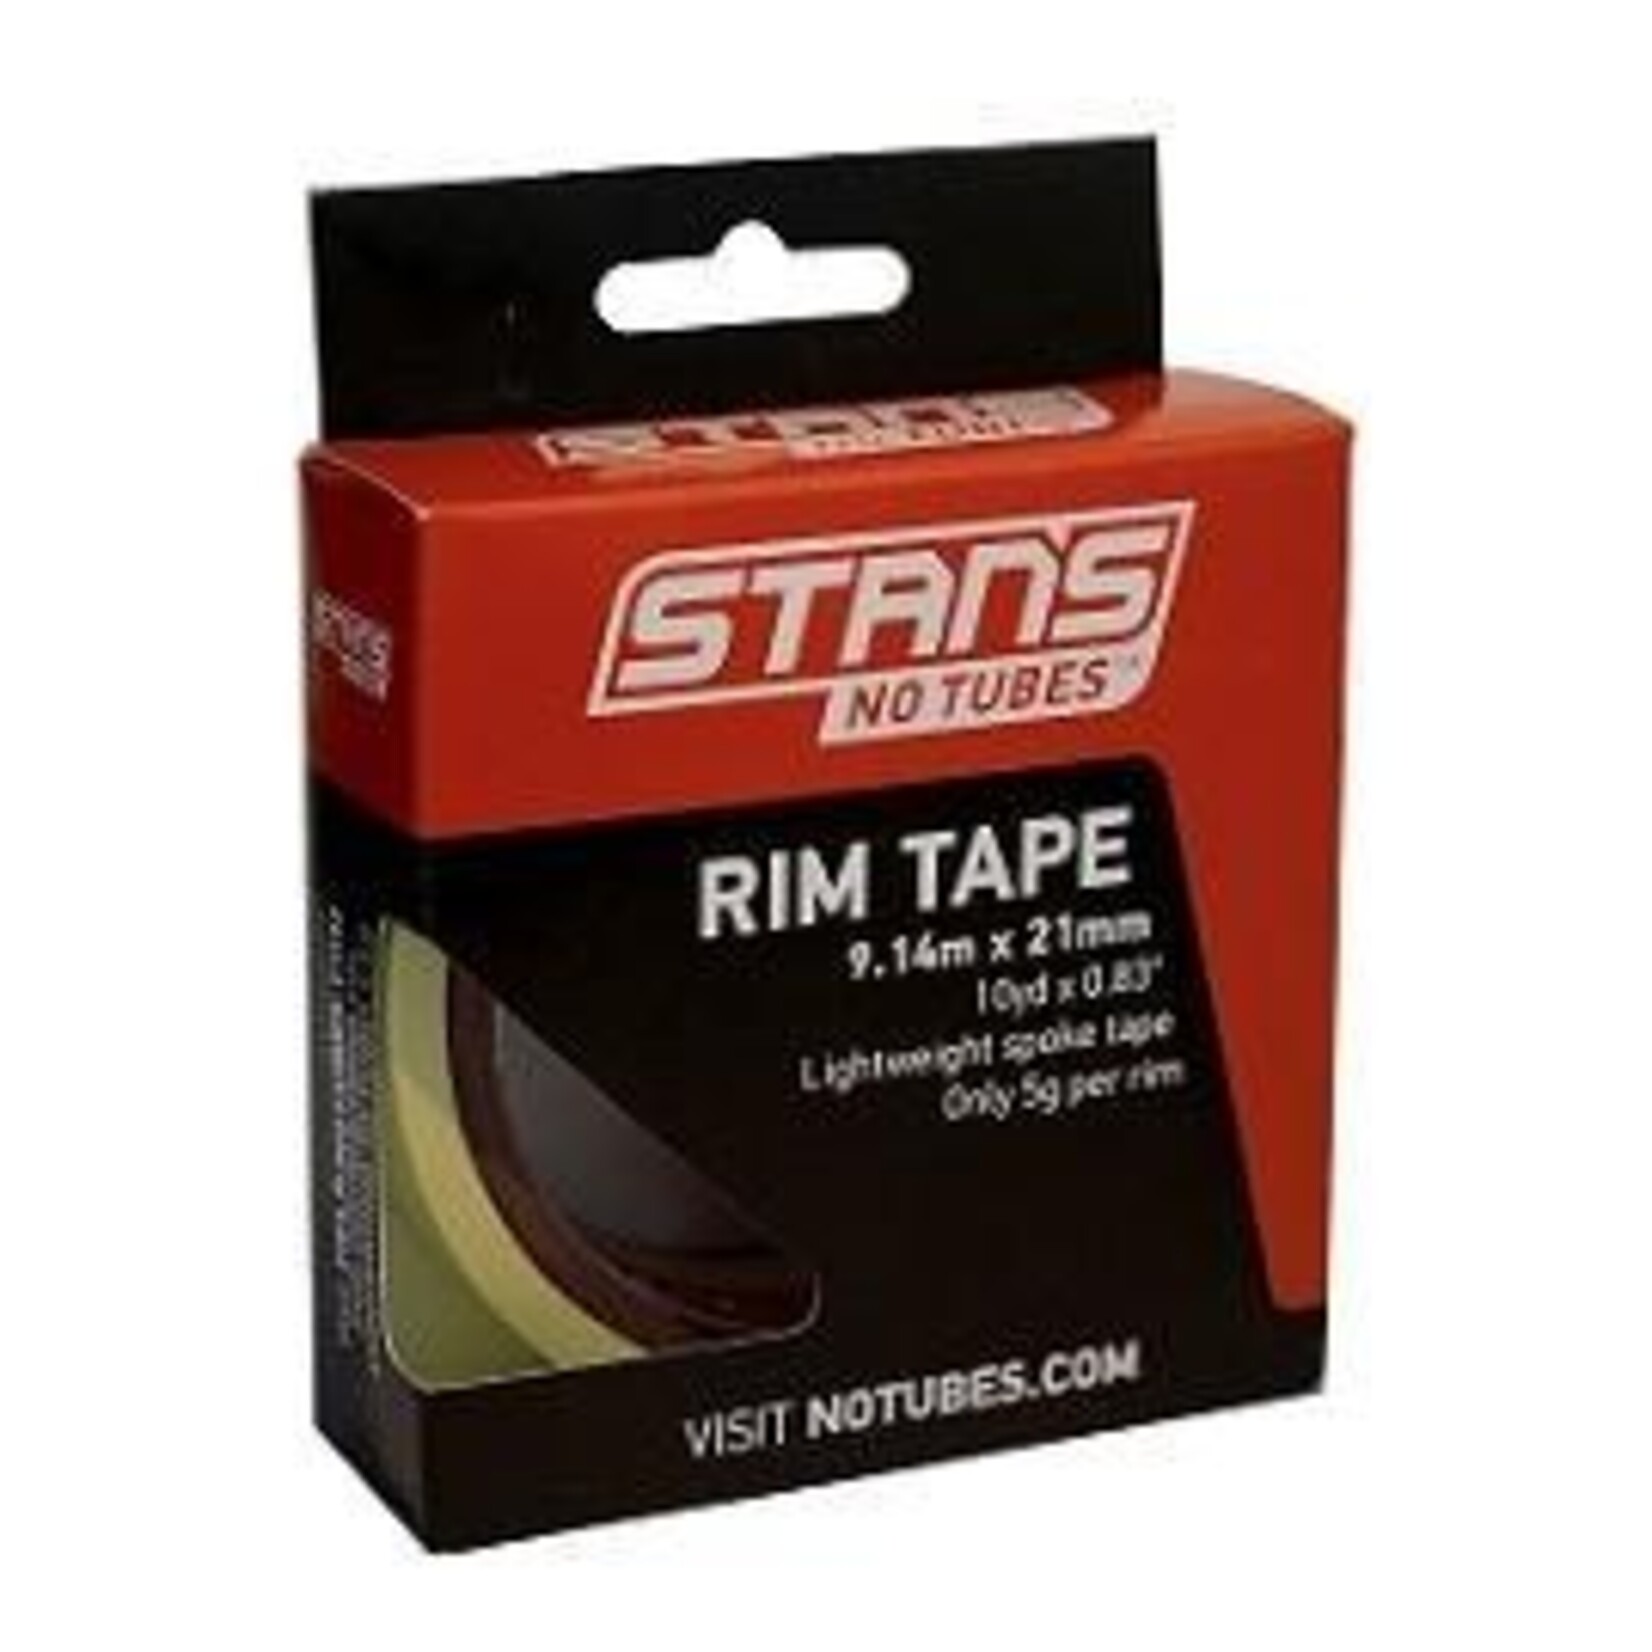 Stans No Tube Stan's No Tubes  Tubeless Rim Tape 9.14m x 21mm